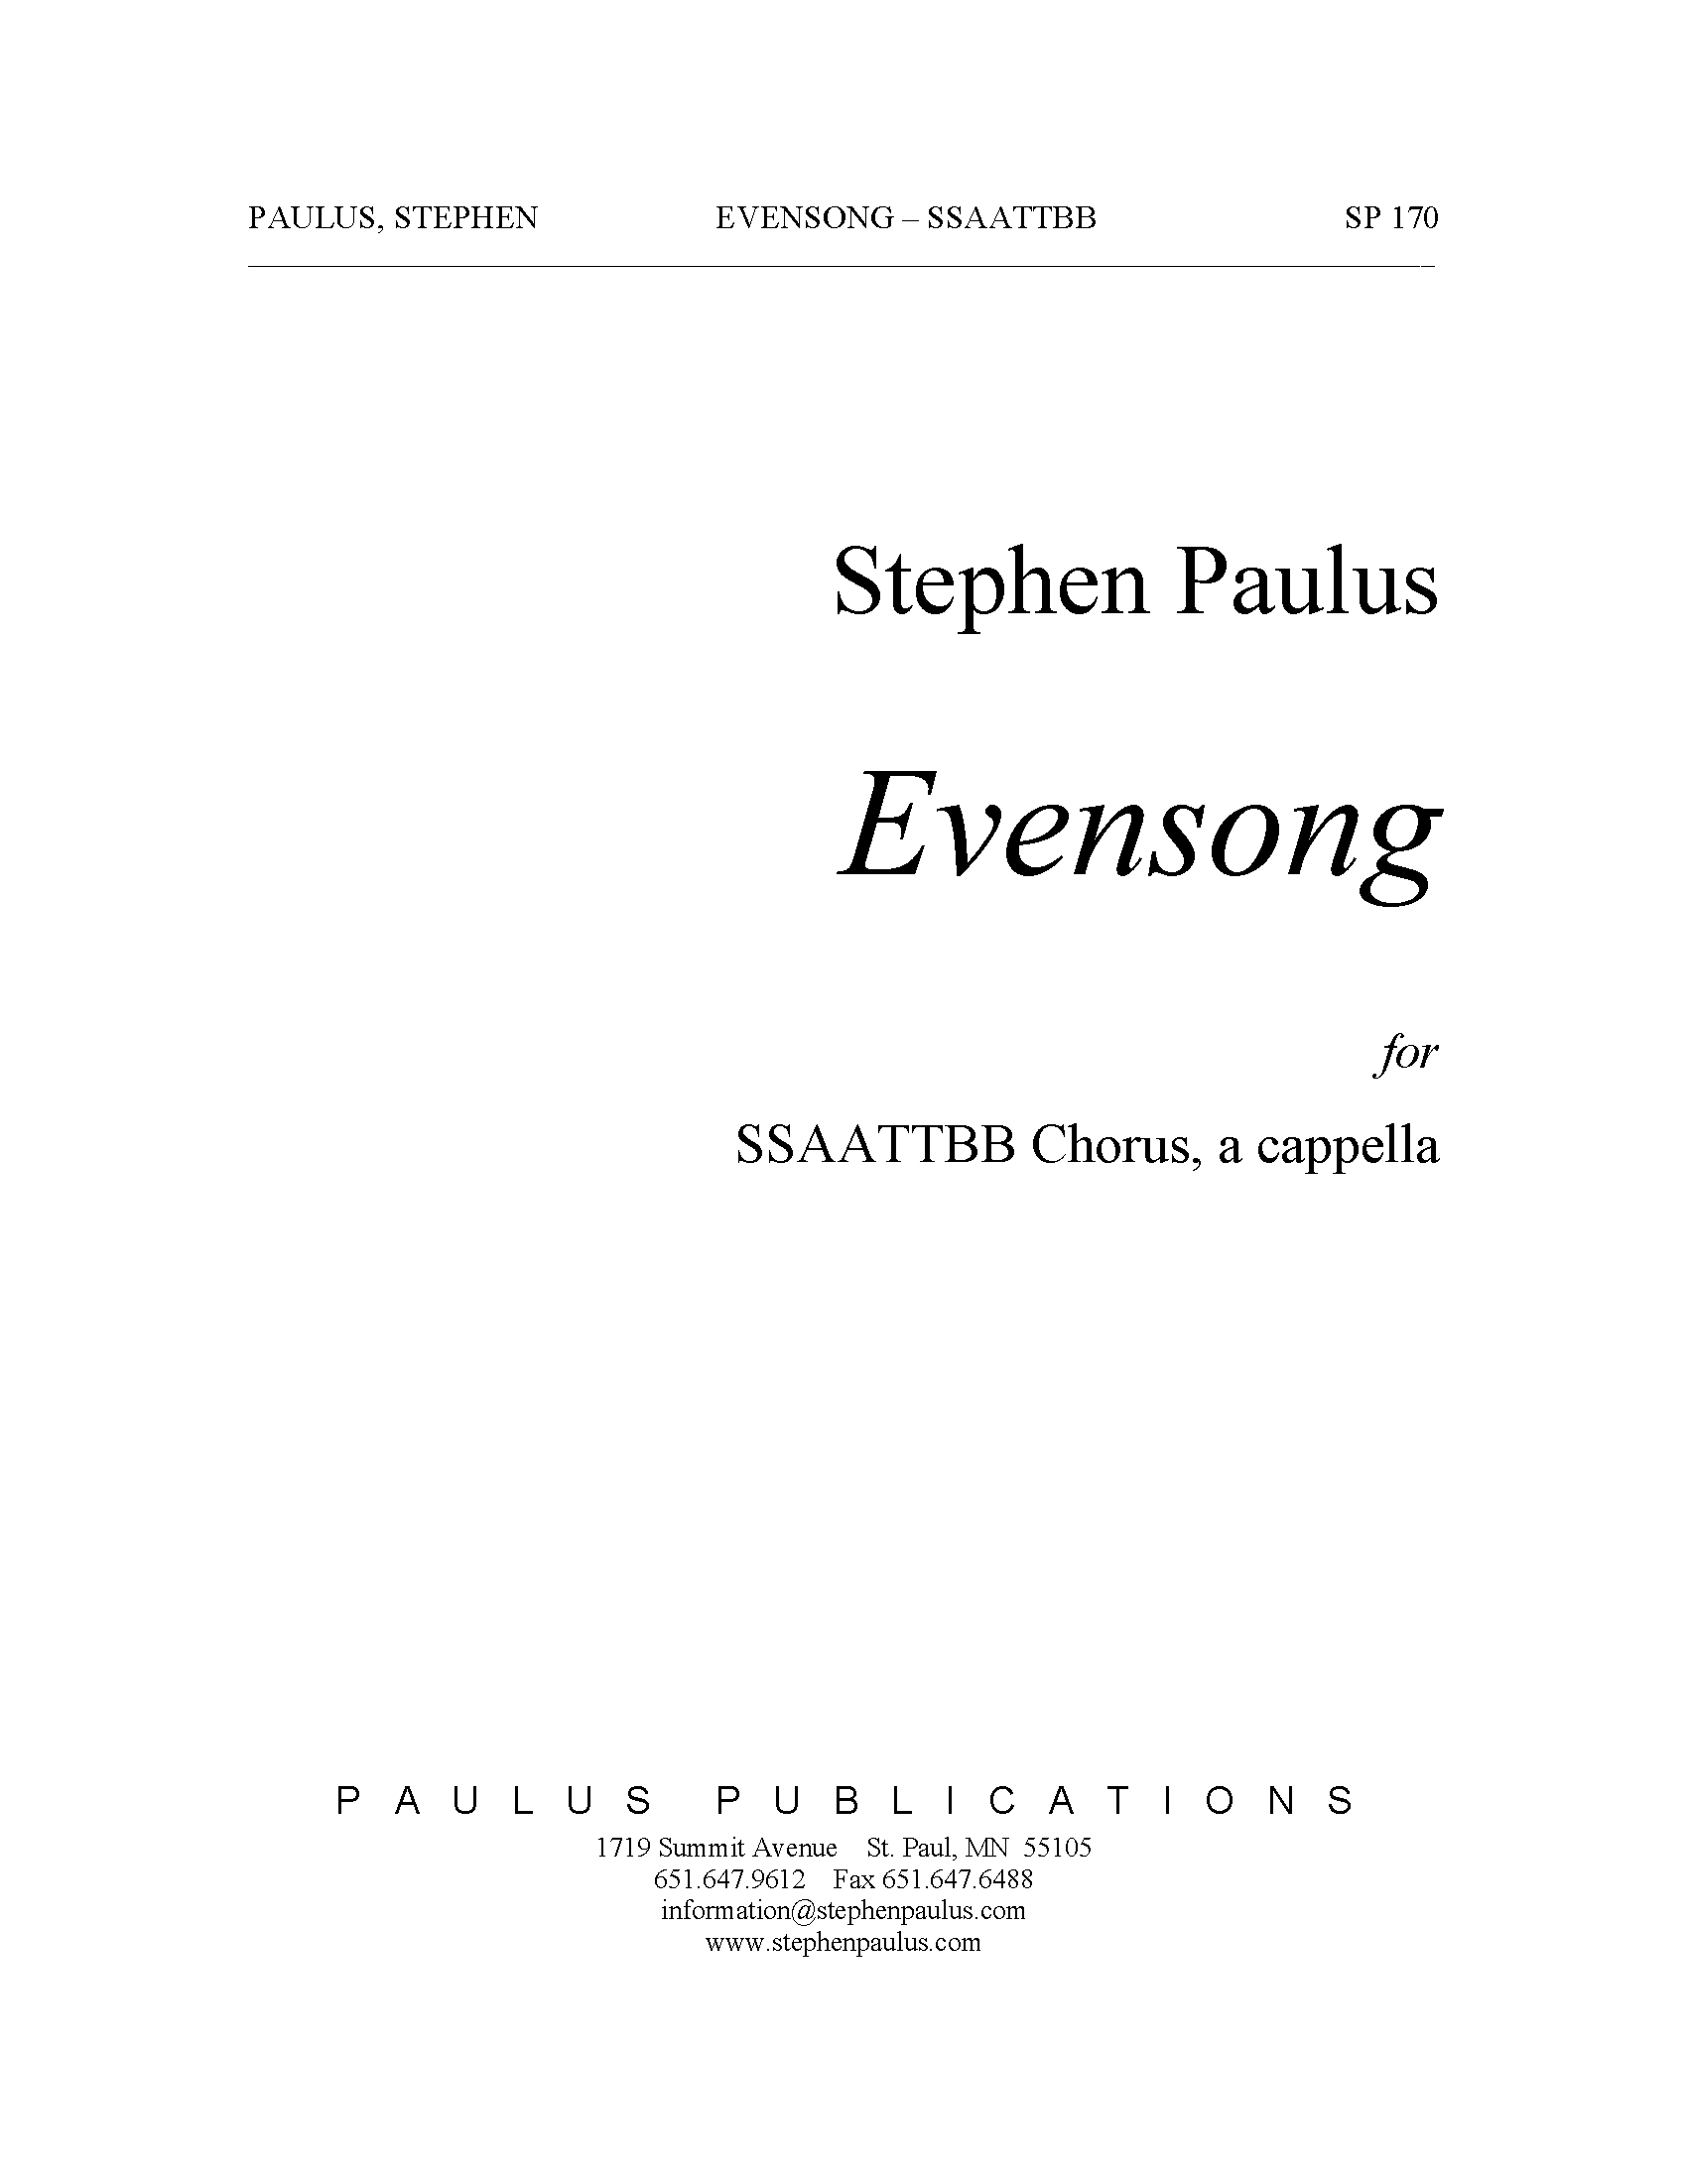 Evensong for SSAATTBB Chorus, a cappella